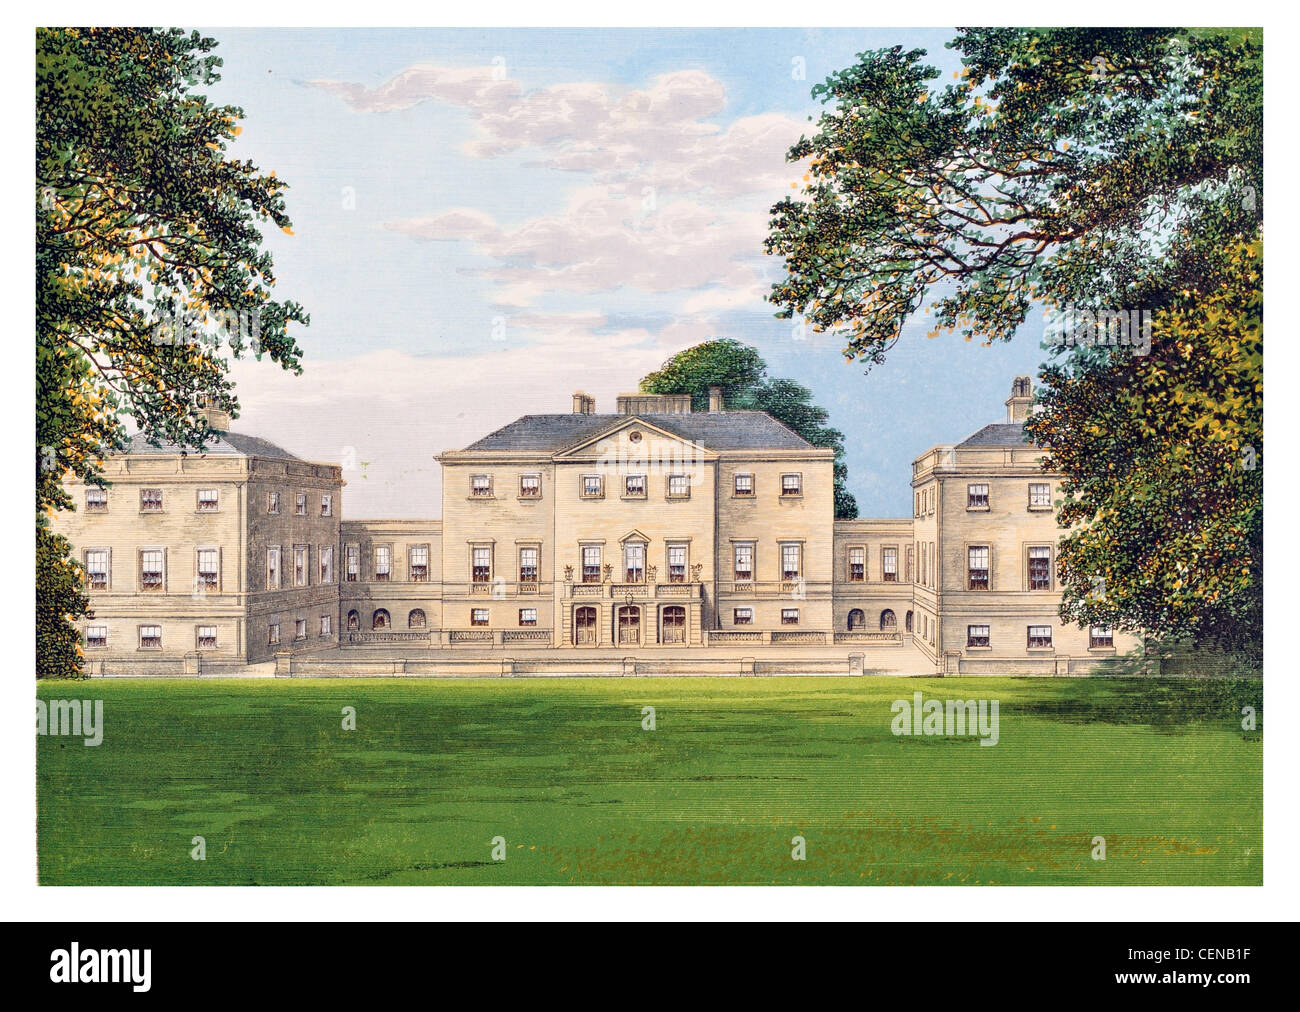 Nuneham Haus palladianische Villa Oxfordshire England UK Retreat Center aufgeführt Brahma Kumaris World Spiritual University Gebäude Stockfoto